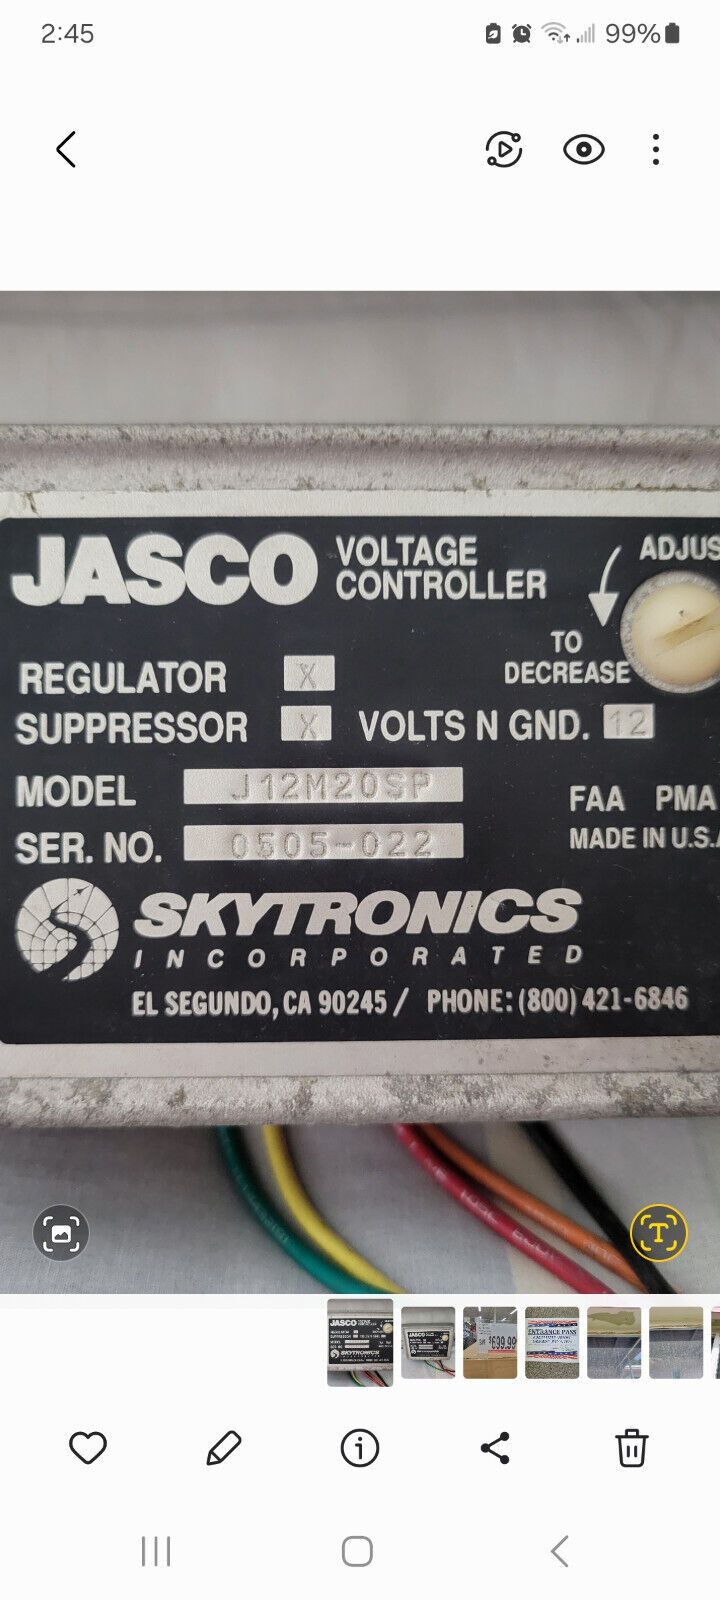 JASCO Voltage Regulator, 14 Volt. Aircraft electrical